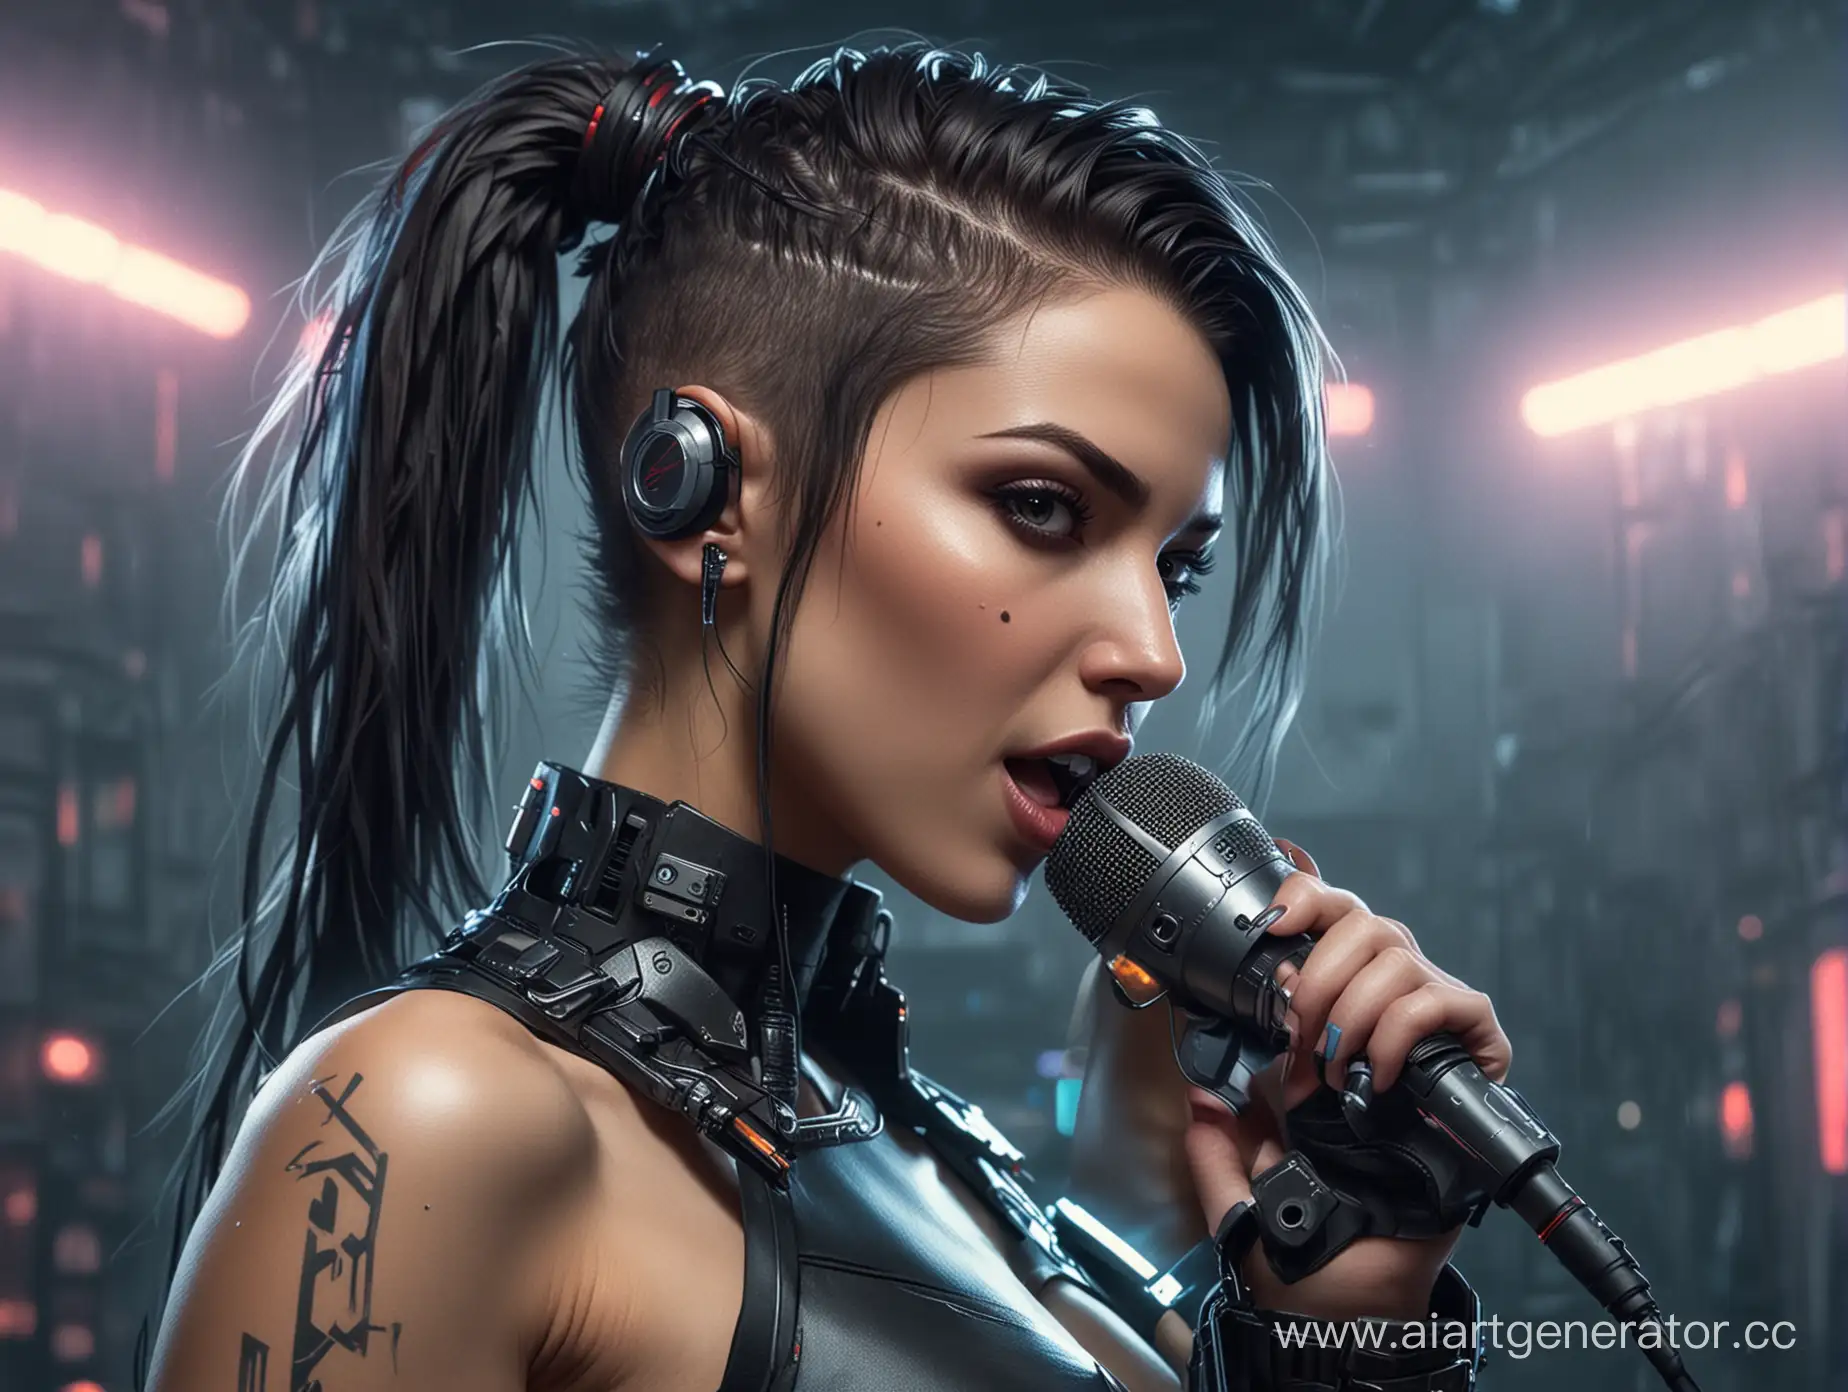 Cyberpunk, a beautiful woman singing into a microphone